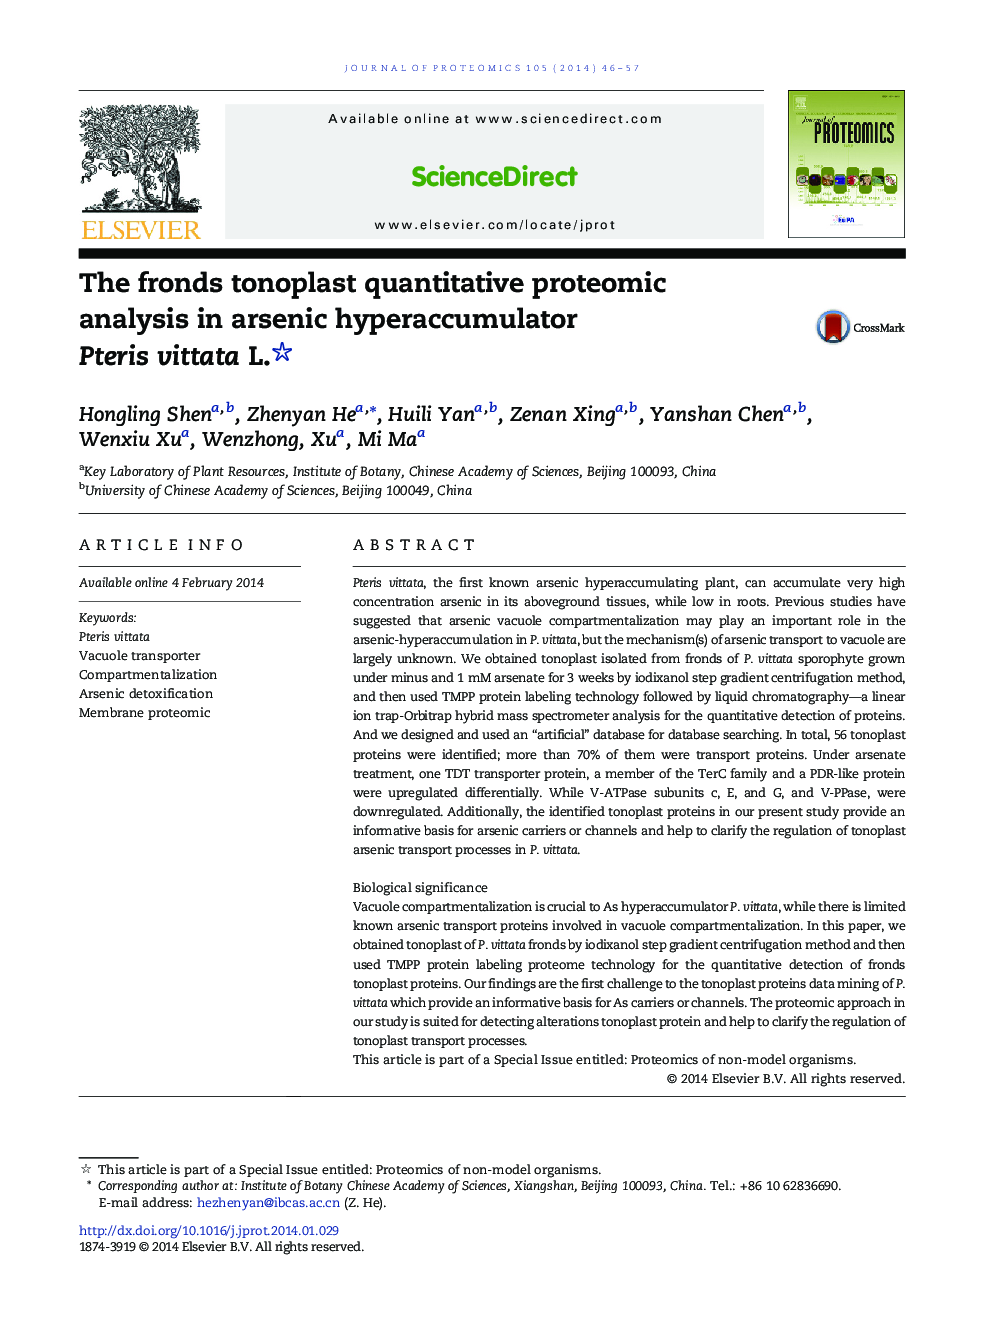 The fronds tonoplast quantitative proteomic analysis in arsenic hyperaccumulator Pteris vittata L. 